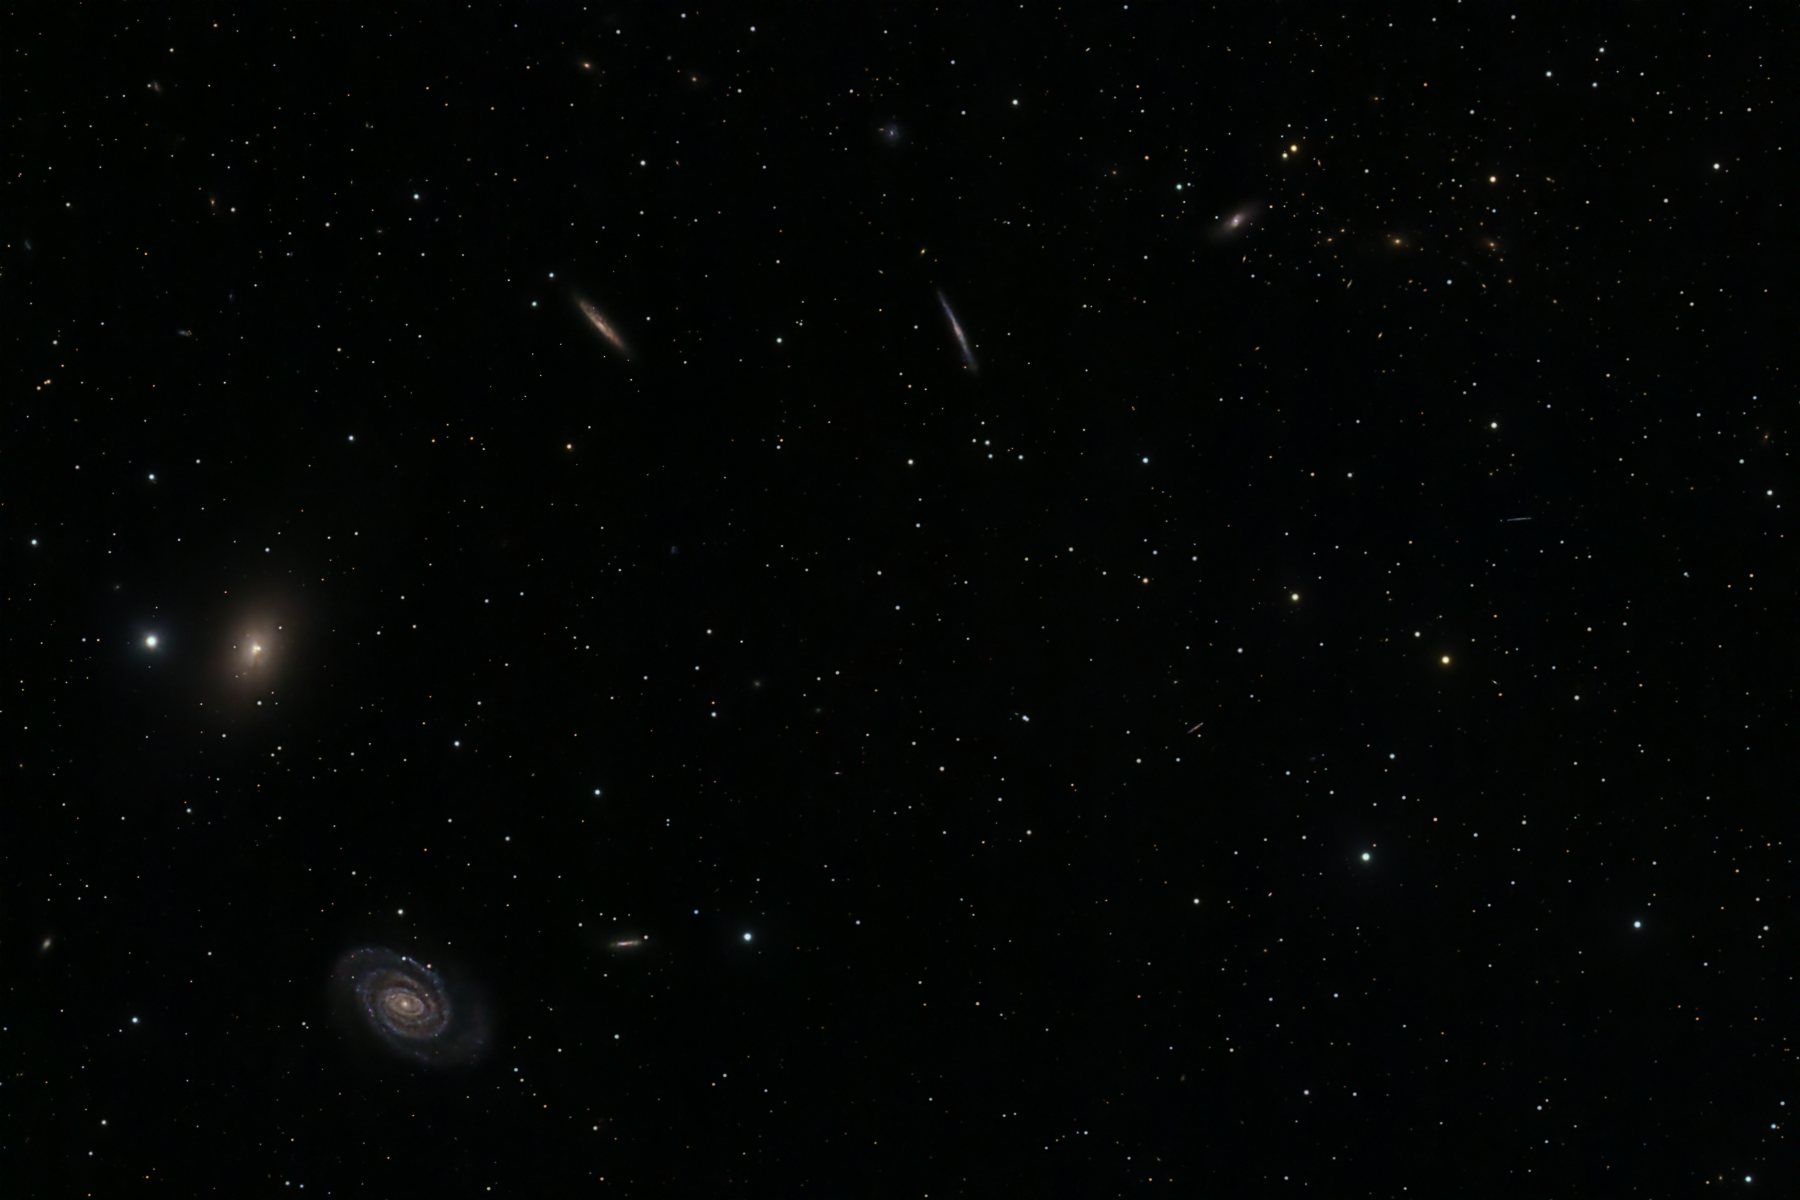 NGC 5364, a grand design spiral galaxy